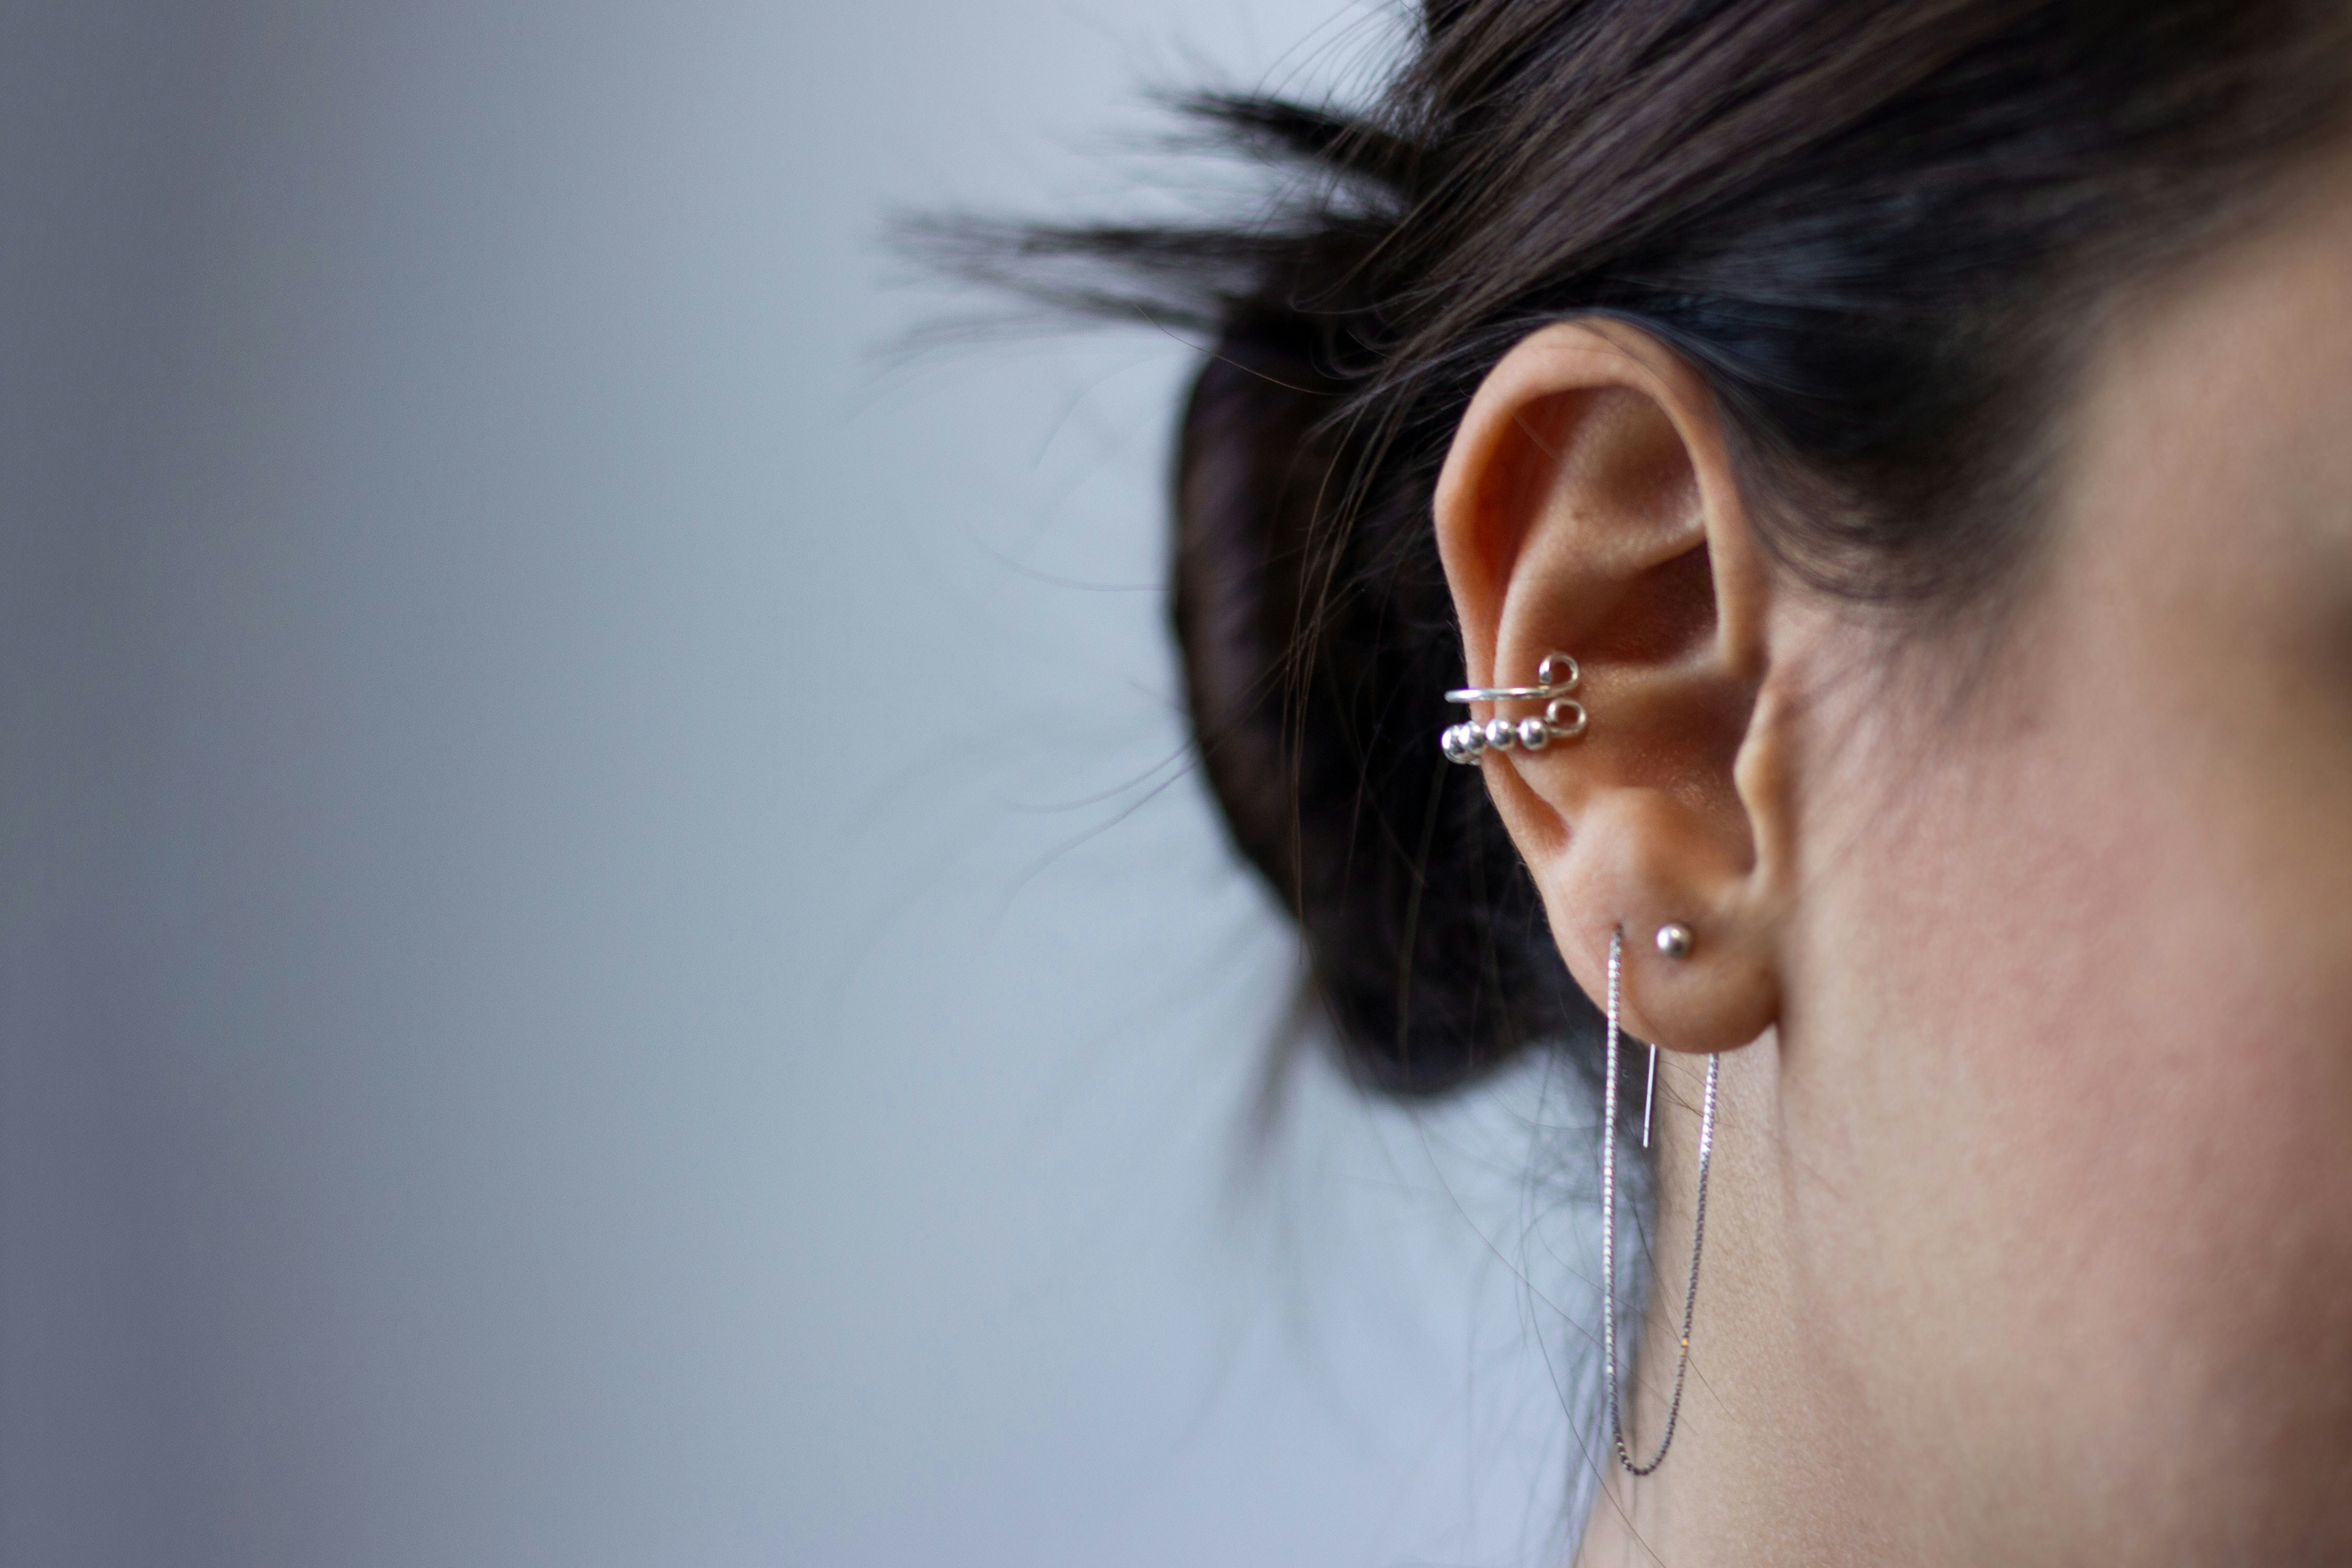 Piercing oreille : bien choisir la taille de son bijou. – C-Bo piercings